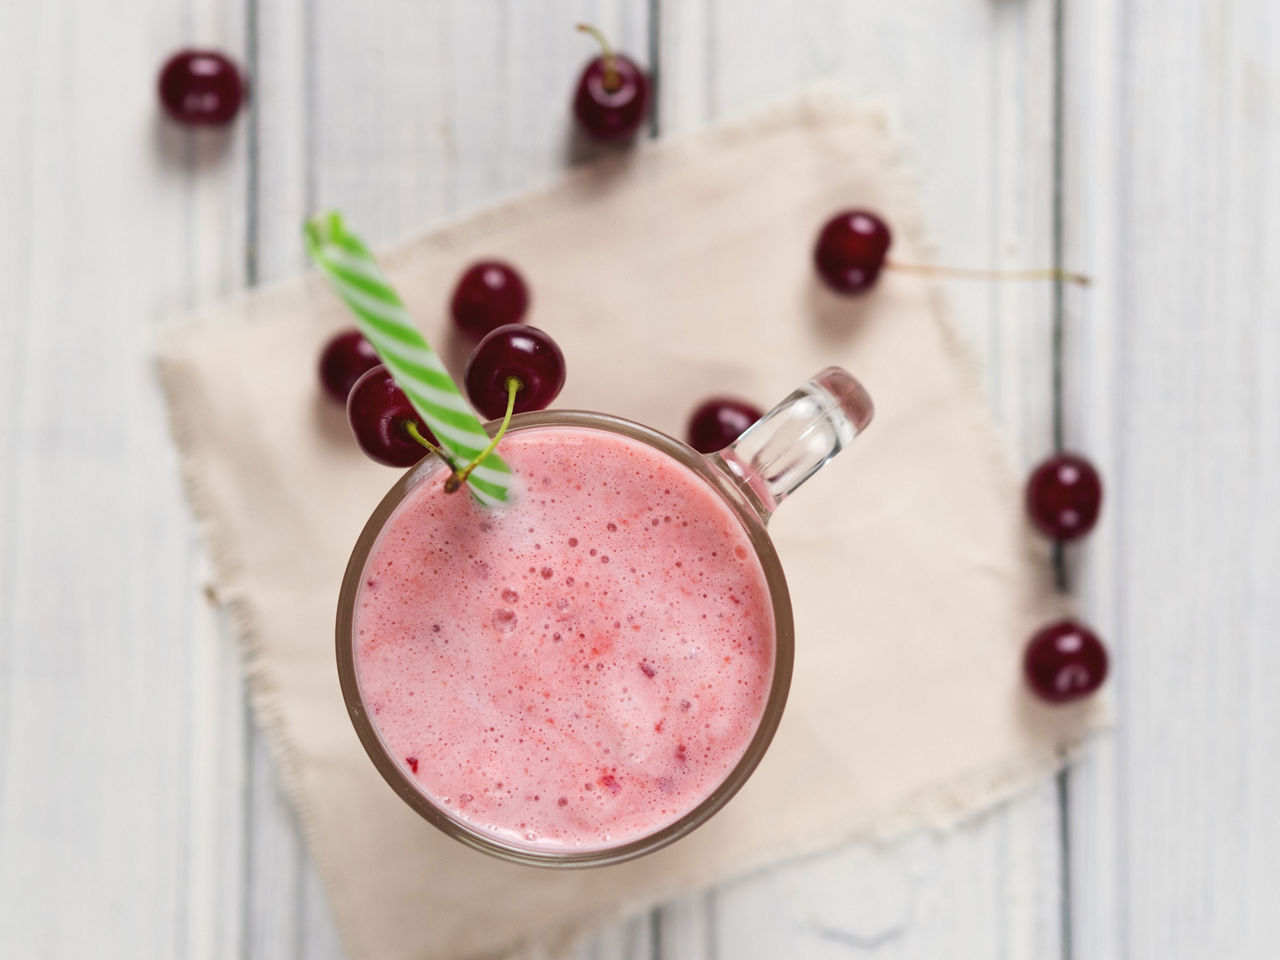 Protein shake with cherries, OLYMPUS DIGITAL CAMERA